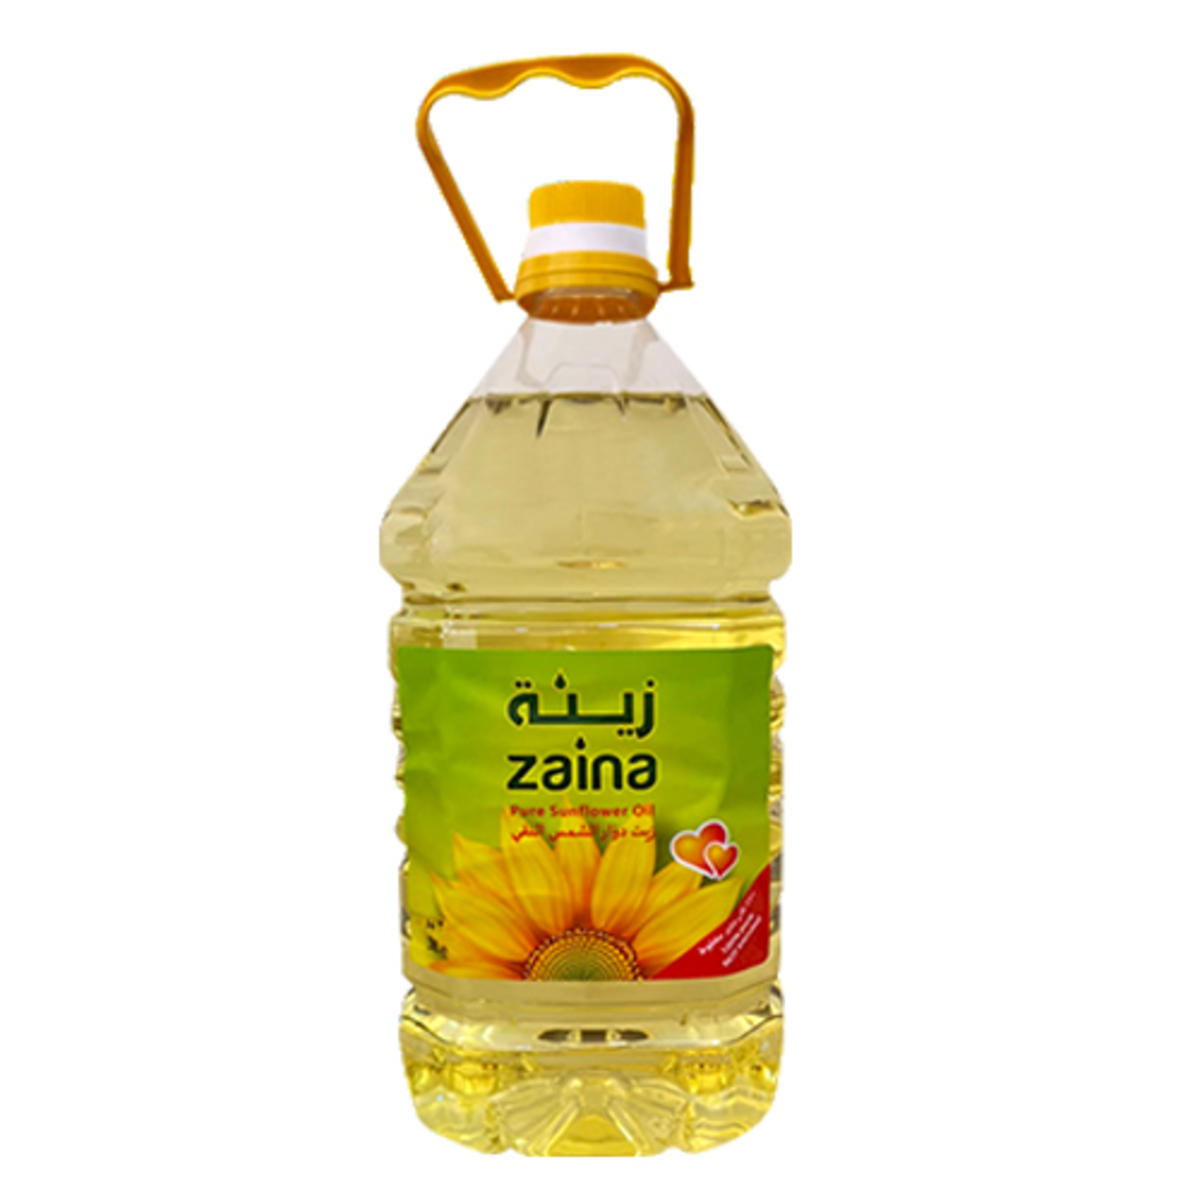 Zaina Sunflower Oil 3Litre